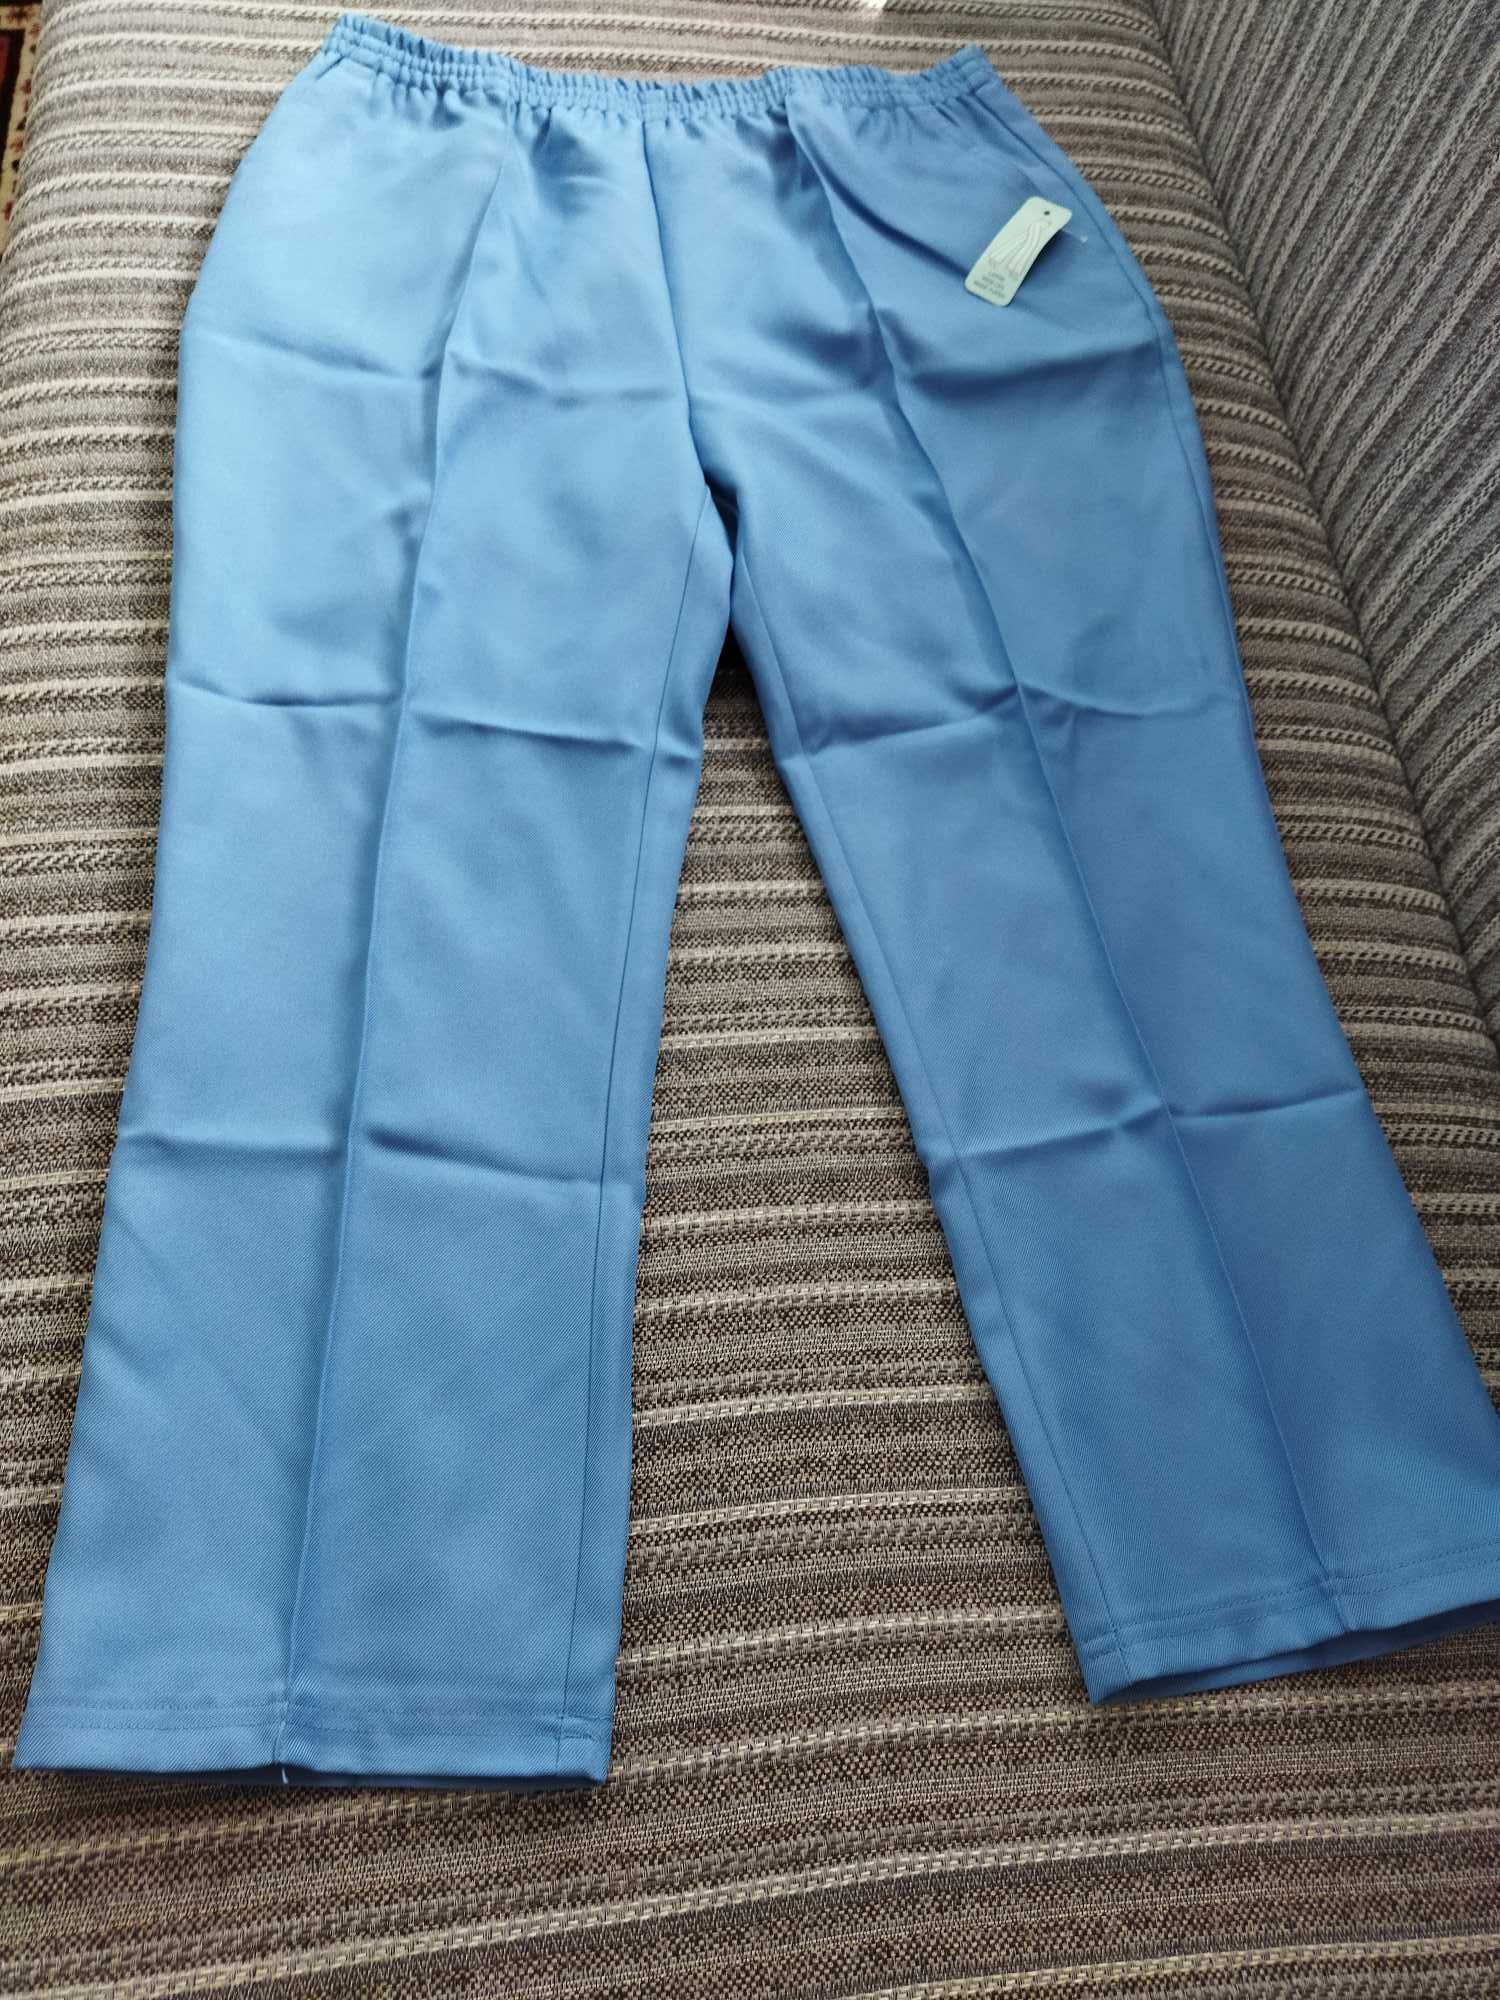 Штани L брюки спецодяг медицинские штаны форма